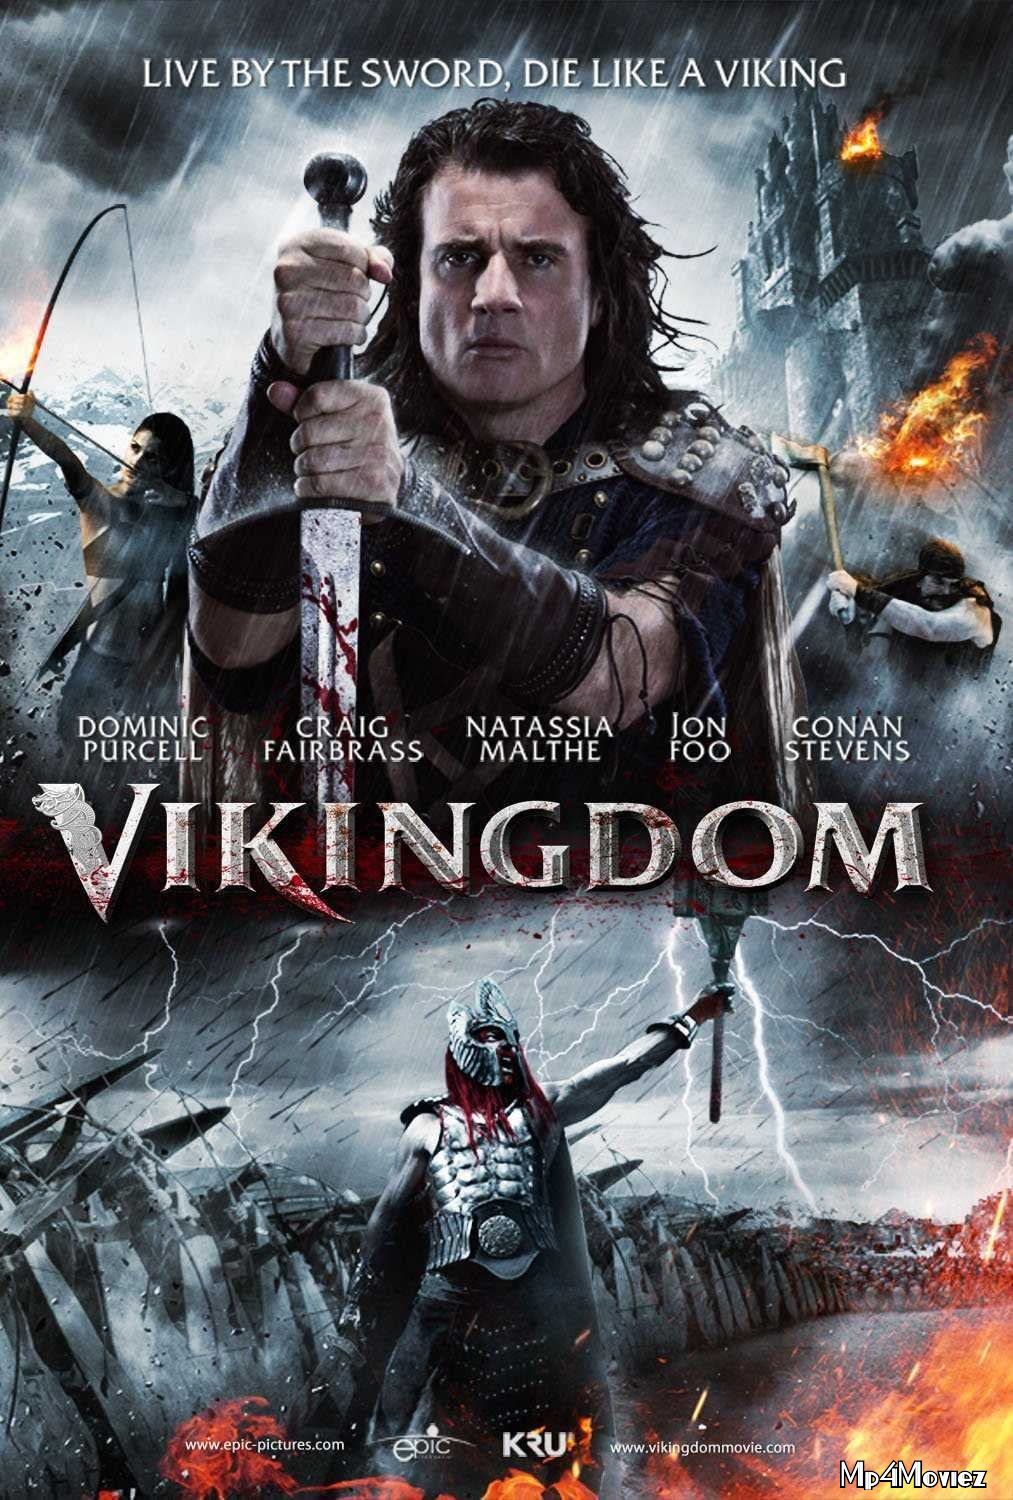 Vikingdom (2013) Hindi Dubbed BRRip download full movie